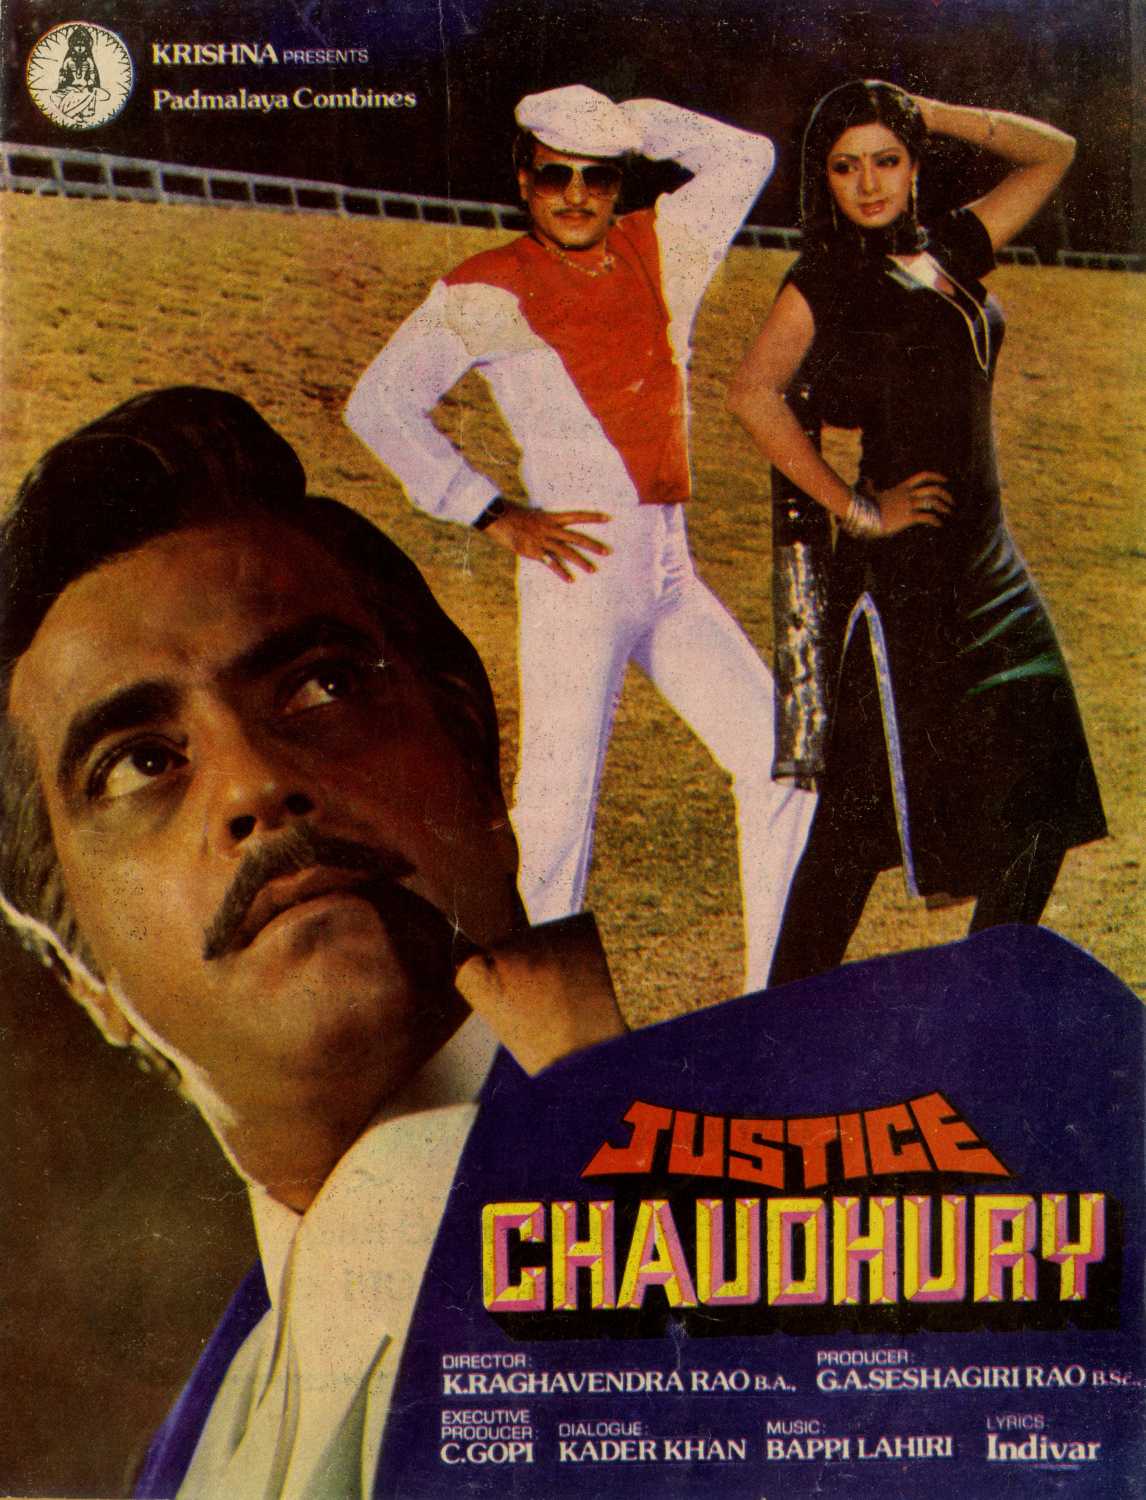 Justice Chaudhury 1983 11114 Poster.jpg